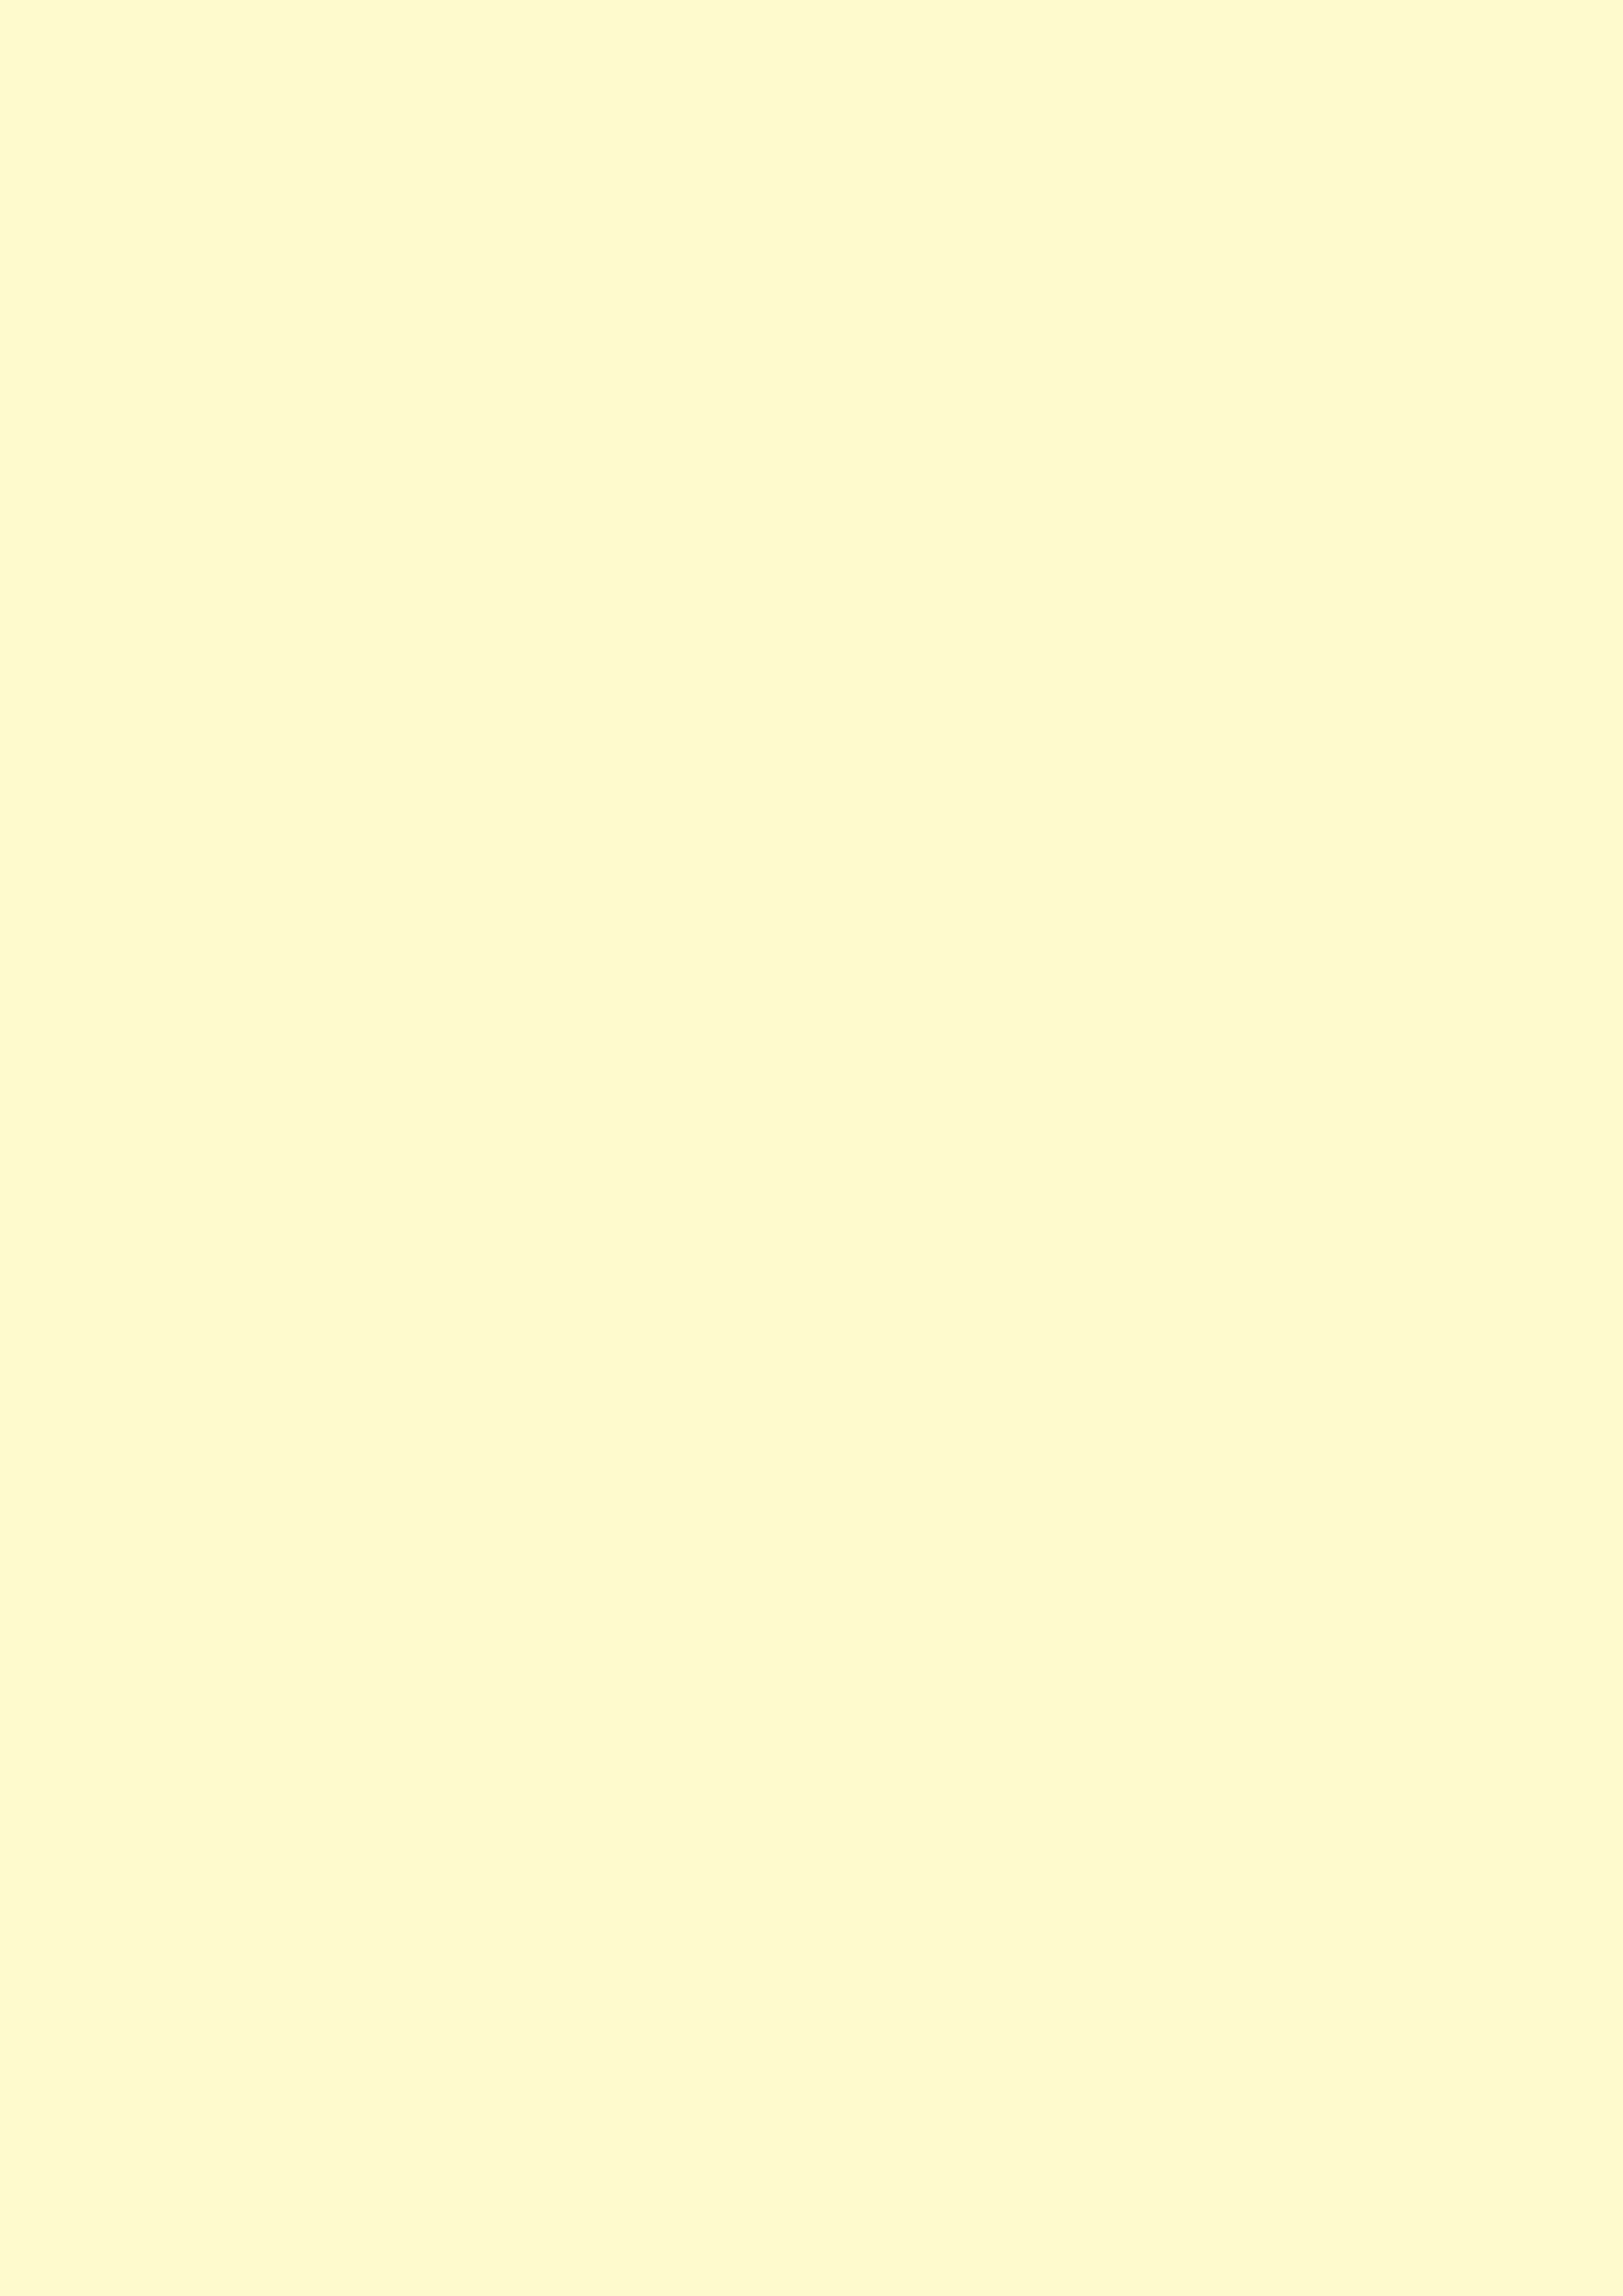 2480x3508 Lemon Chiffon Solid Color Background